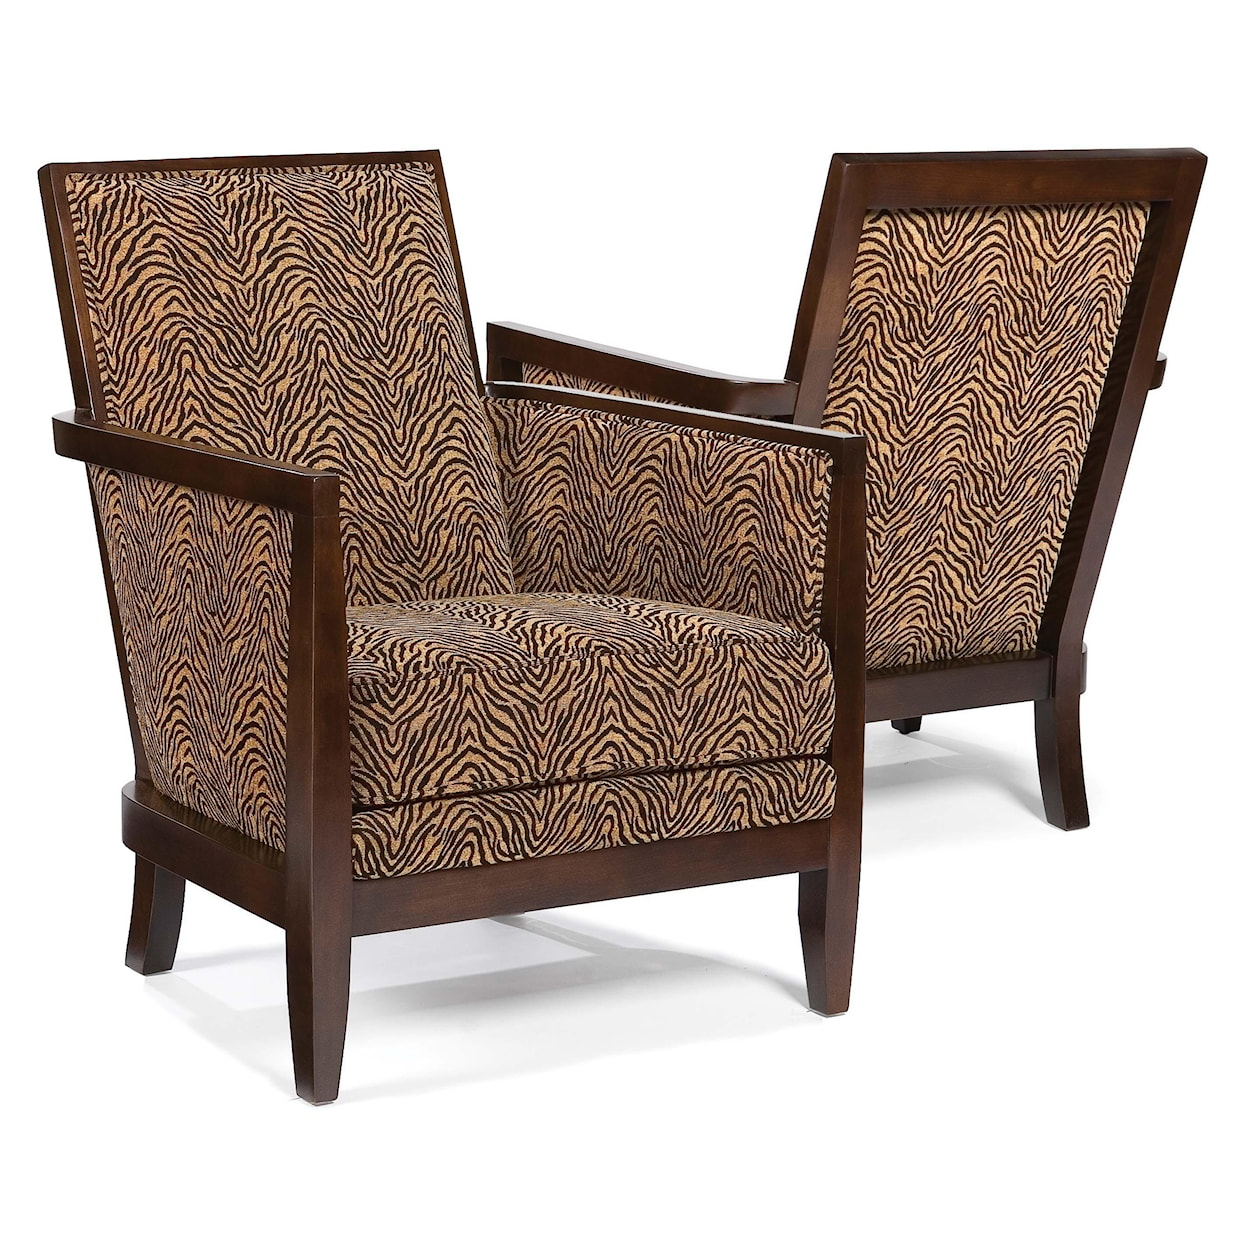 Fairfield Chairs Geometric Exposed-Wood Chair